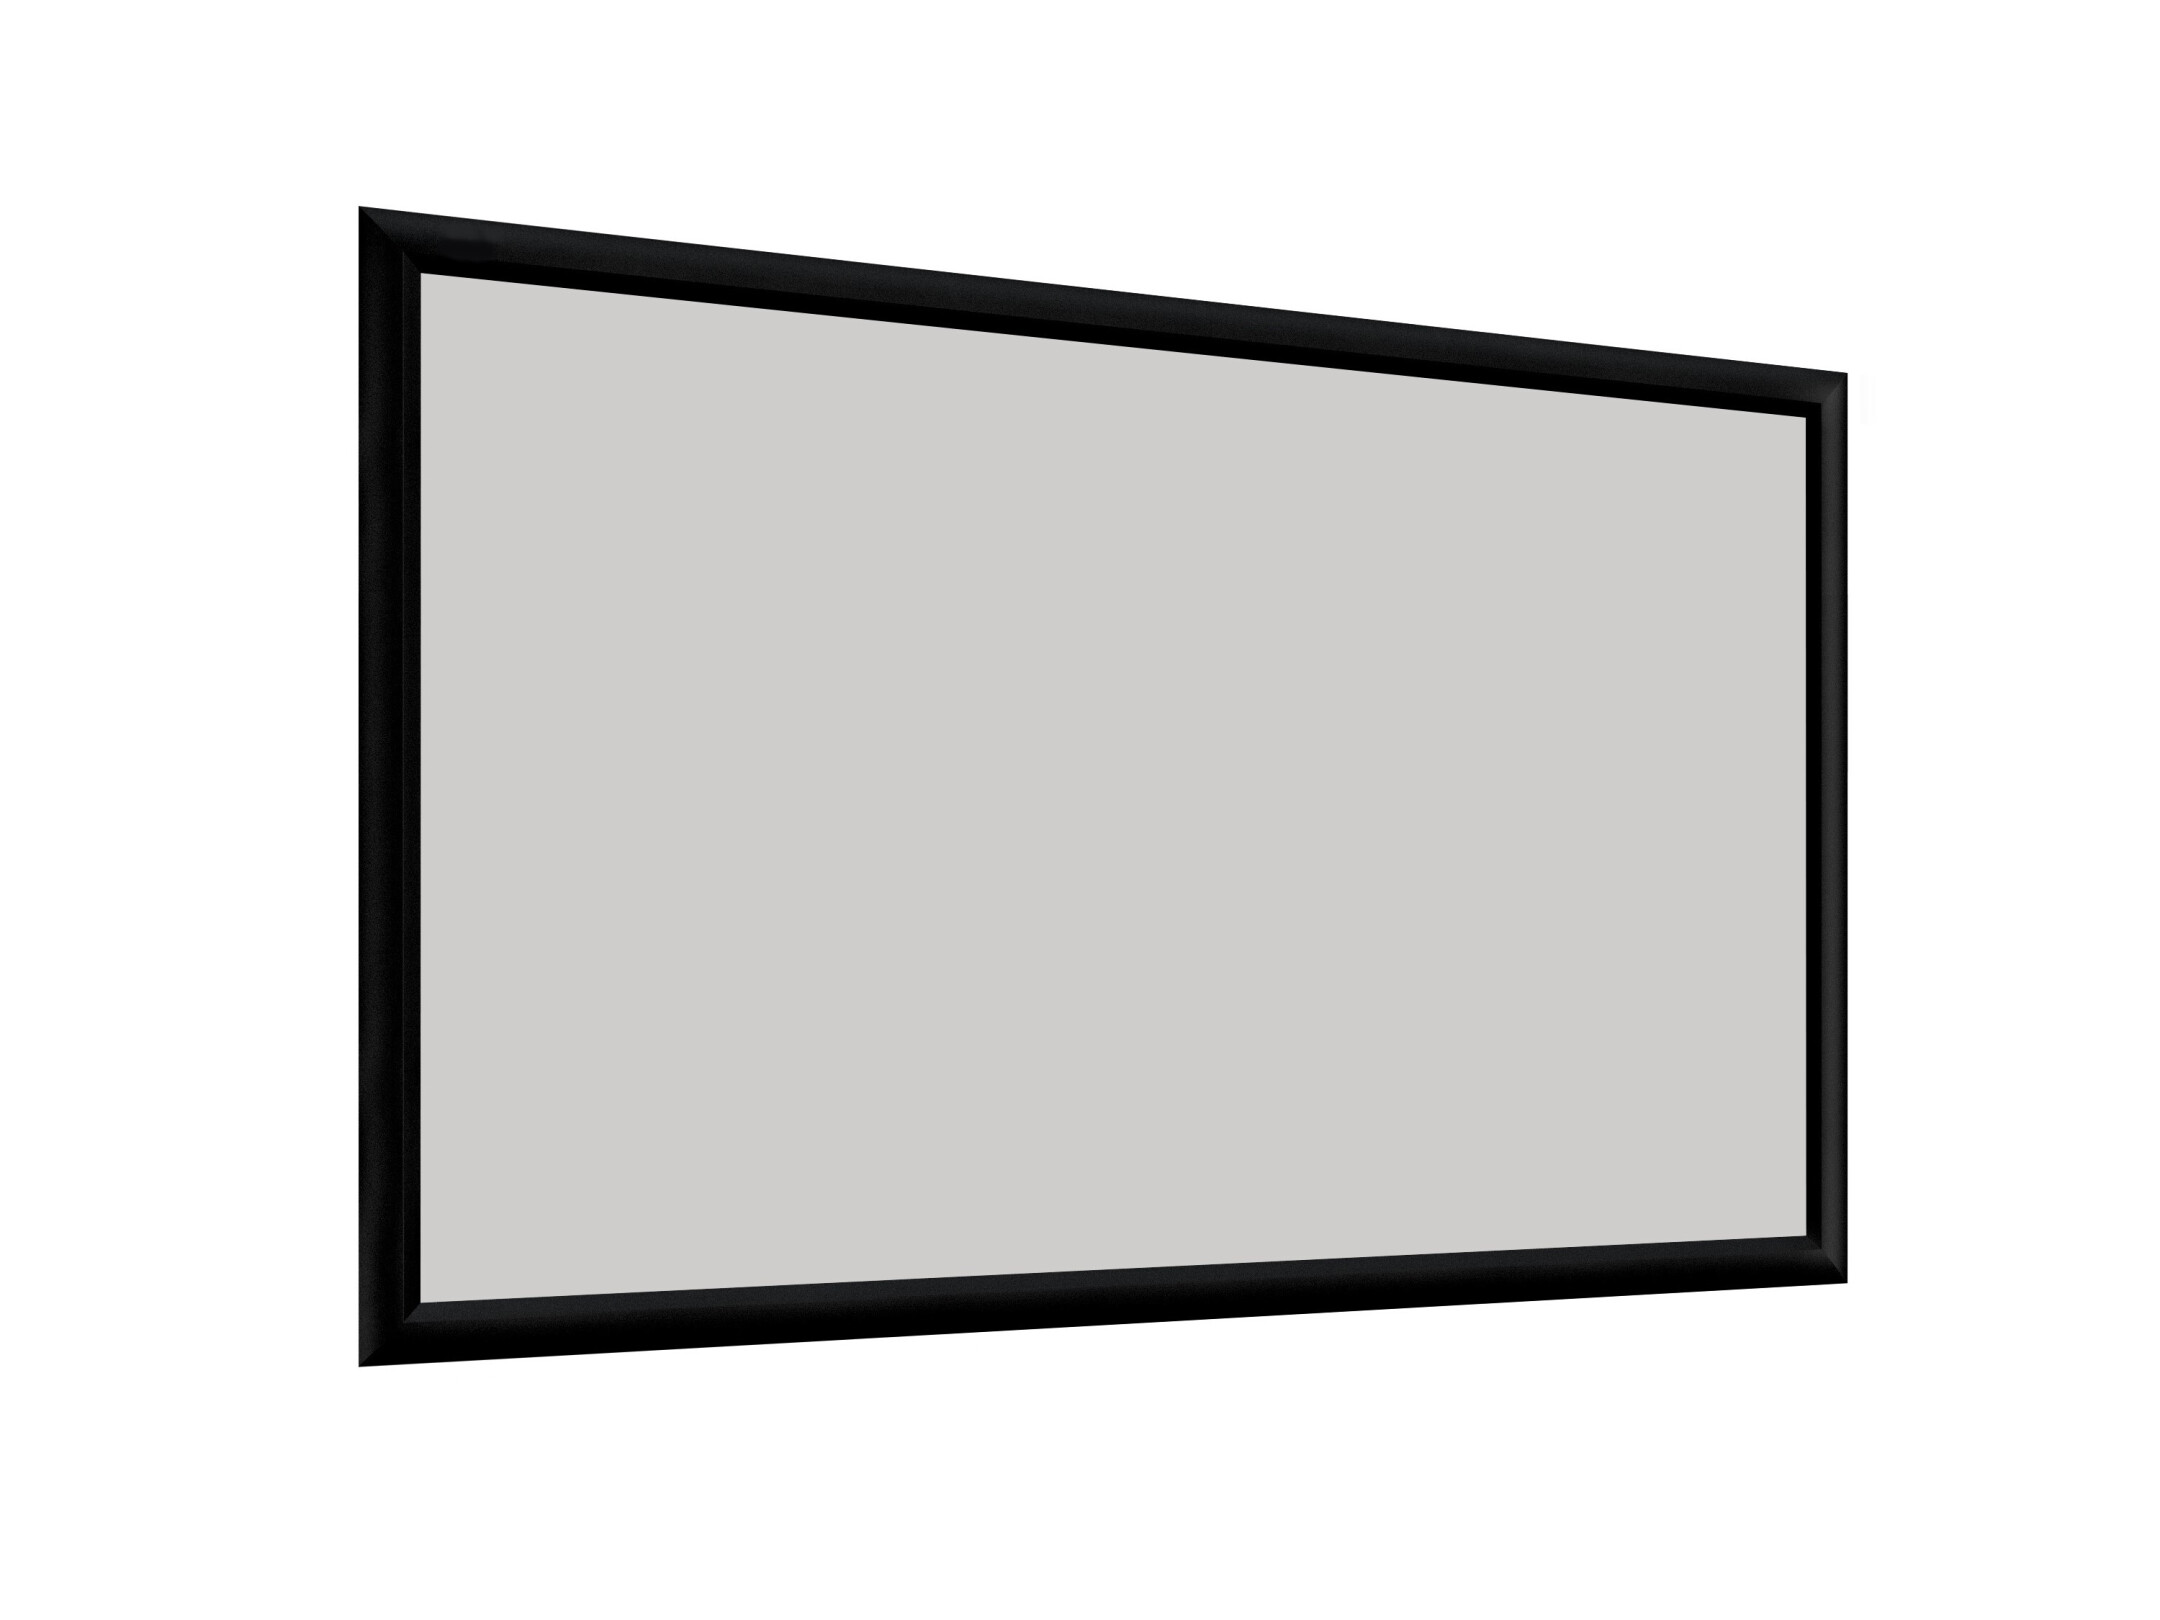 DELUXX-Cinema-Hoogcontrast-frame-projectiescherm-280-x-158-cm-126-DAYVISION-ALR